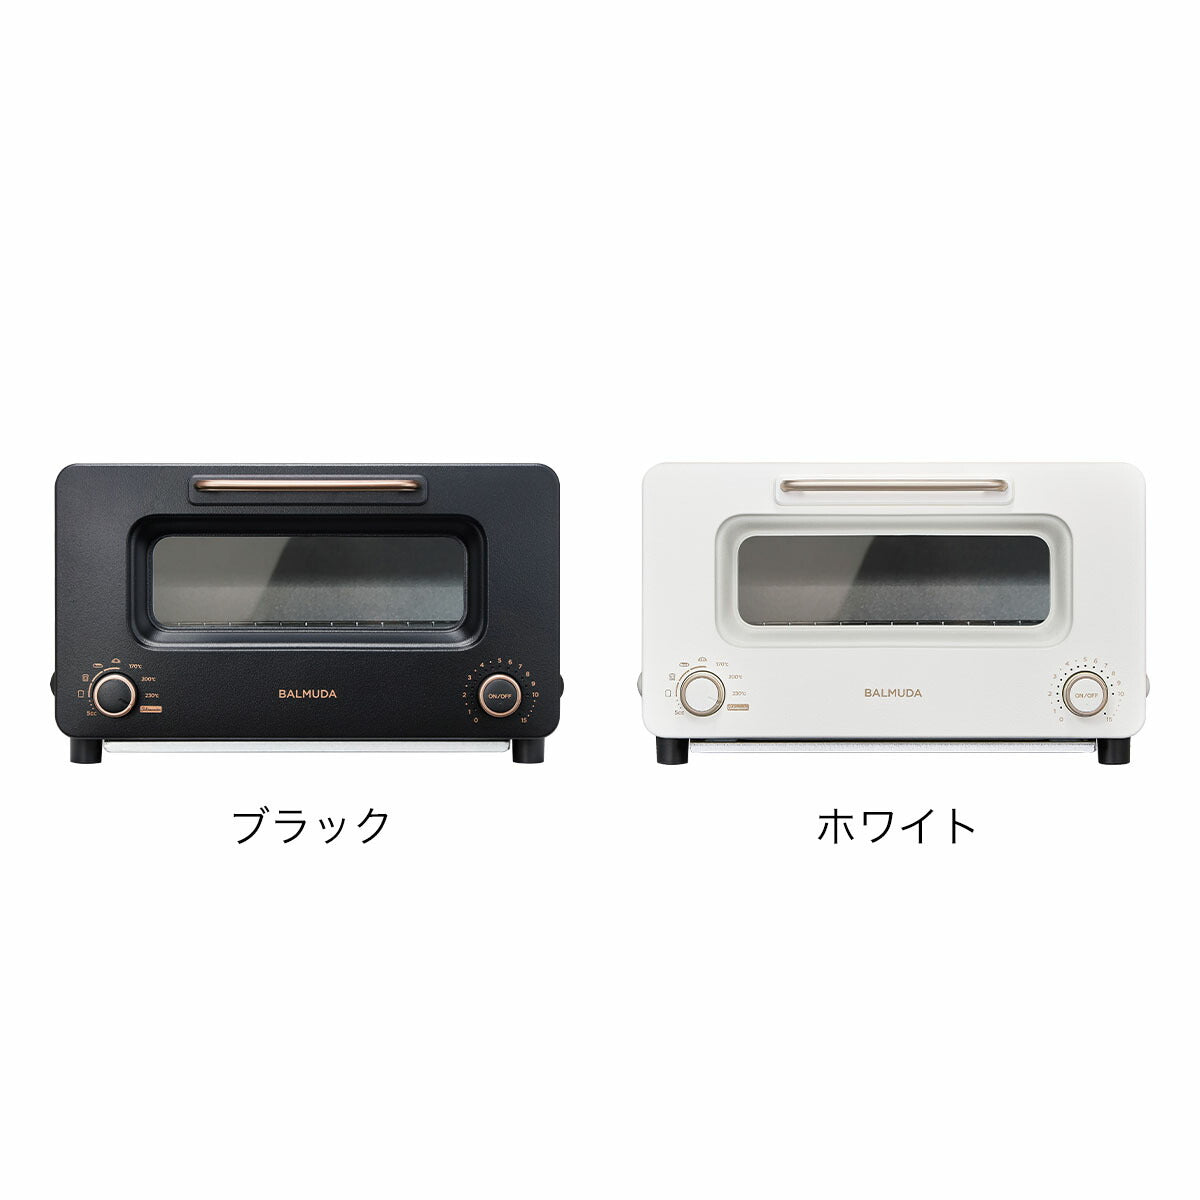 BALMUDA The Toaster Pro / バルミューダ ザ・トースター プロ K11A-SE ...